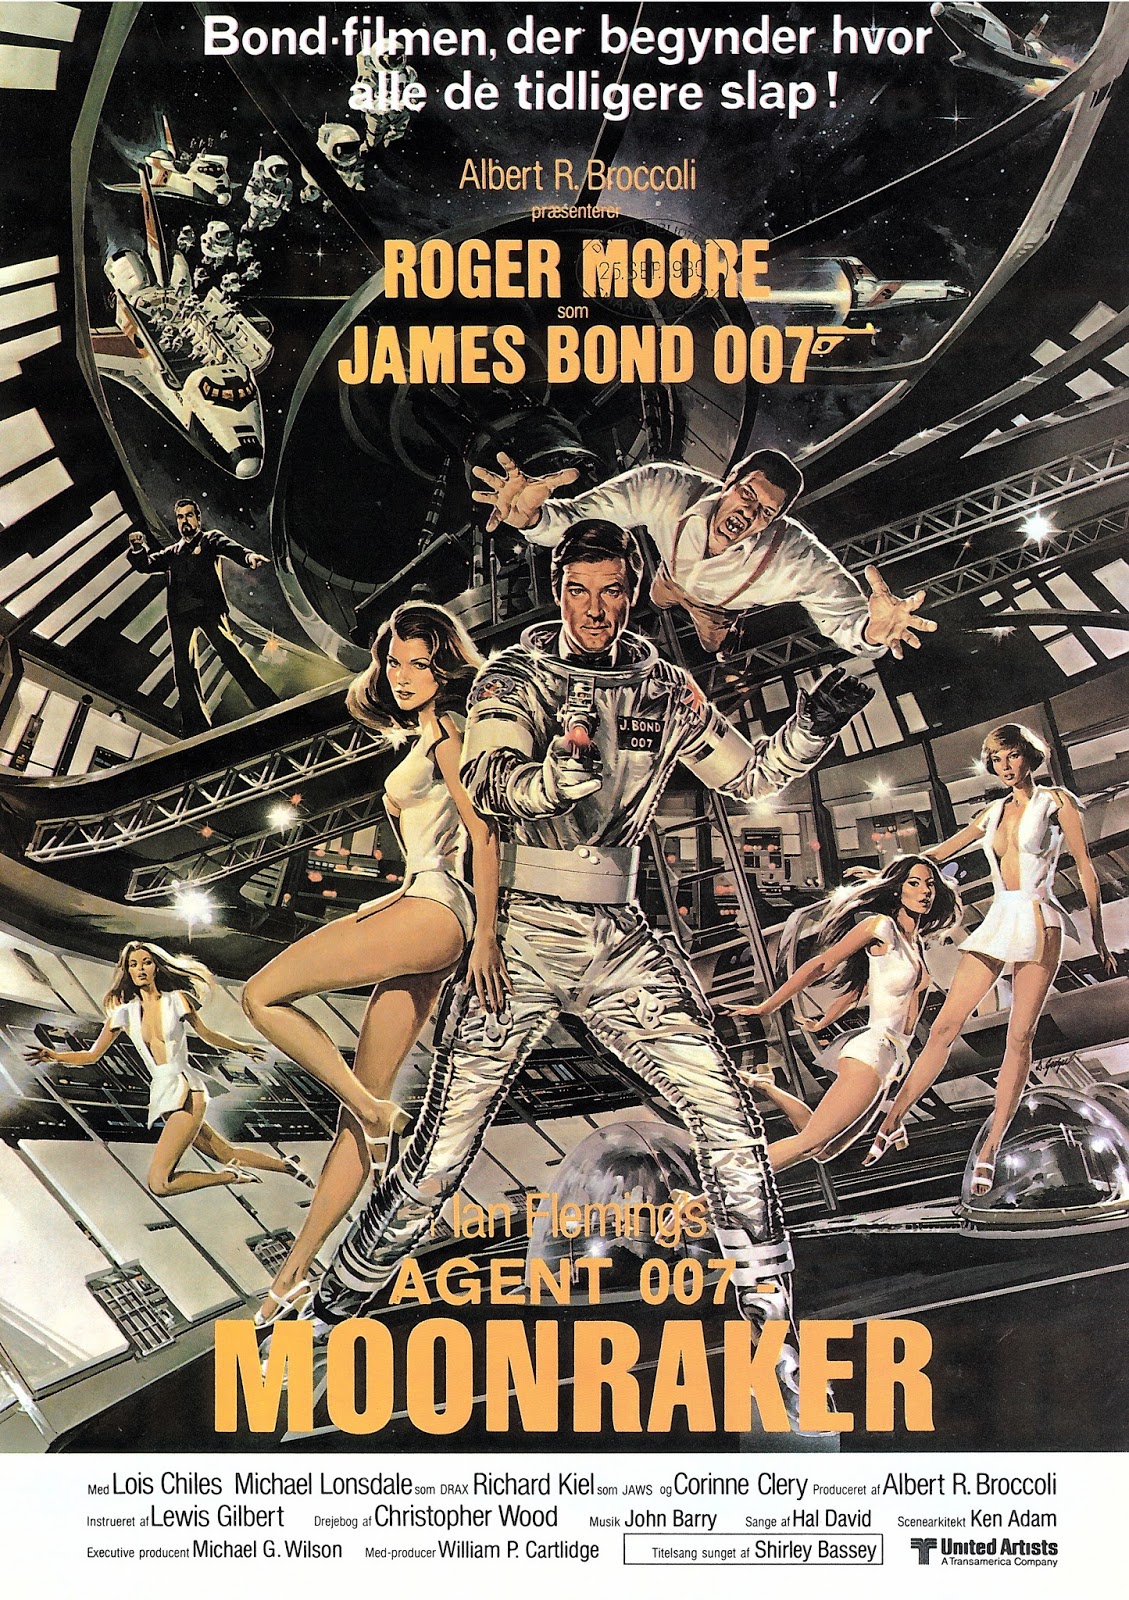 11-Agent-007-Moonraker-version-1.jpg